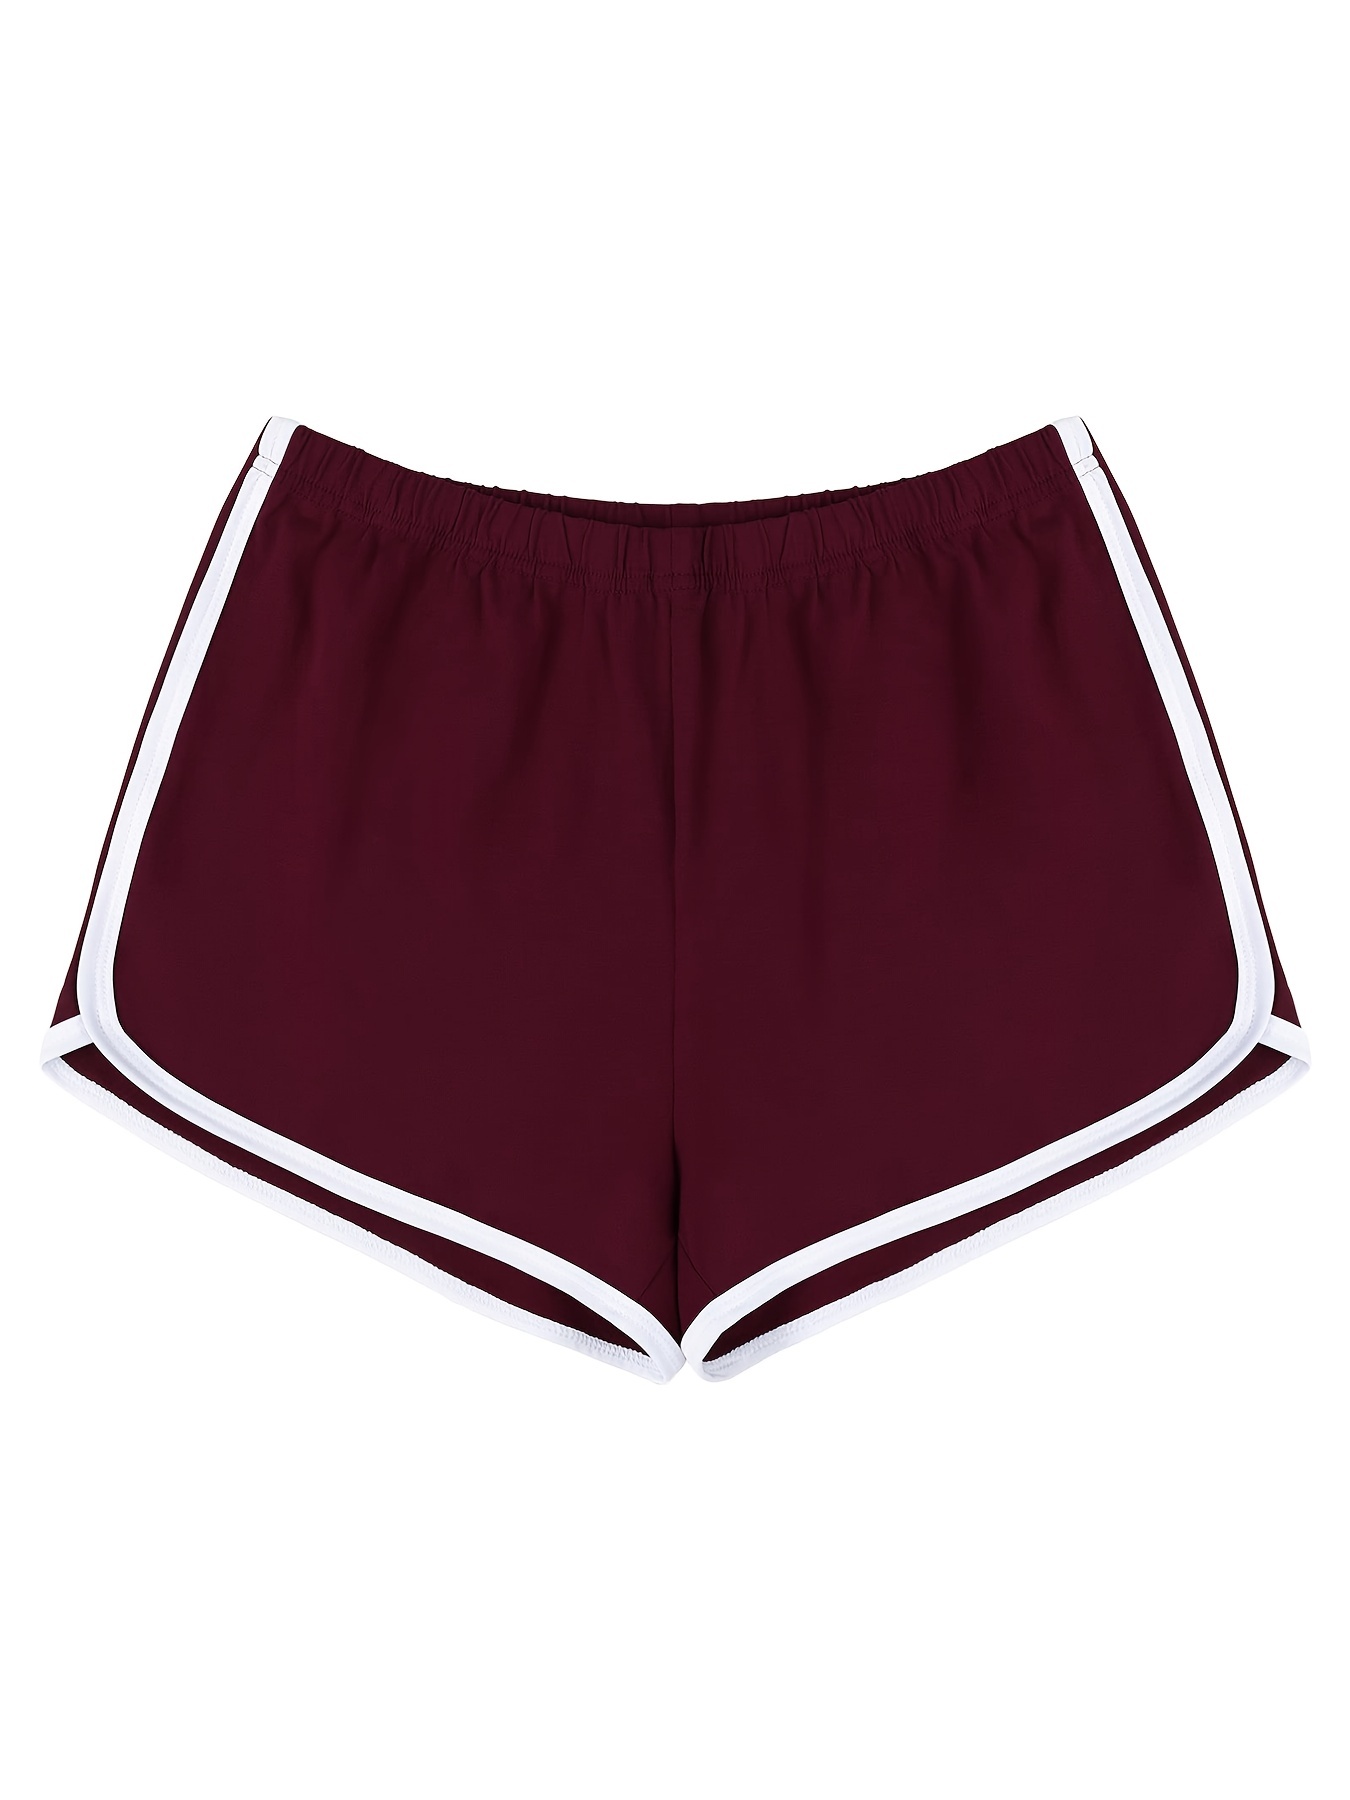 4F Leggings 4F - Damen Sport Shorts Boardshort - kurze Hose, burgundy